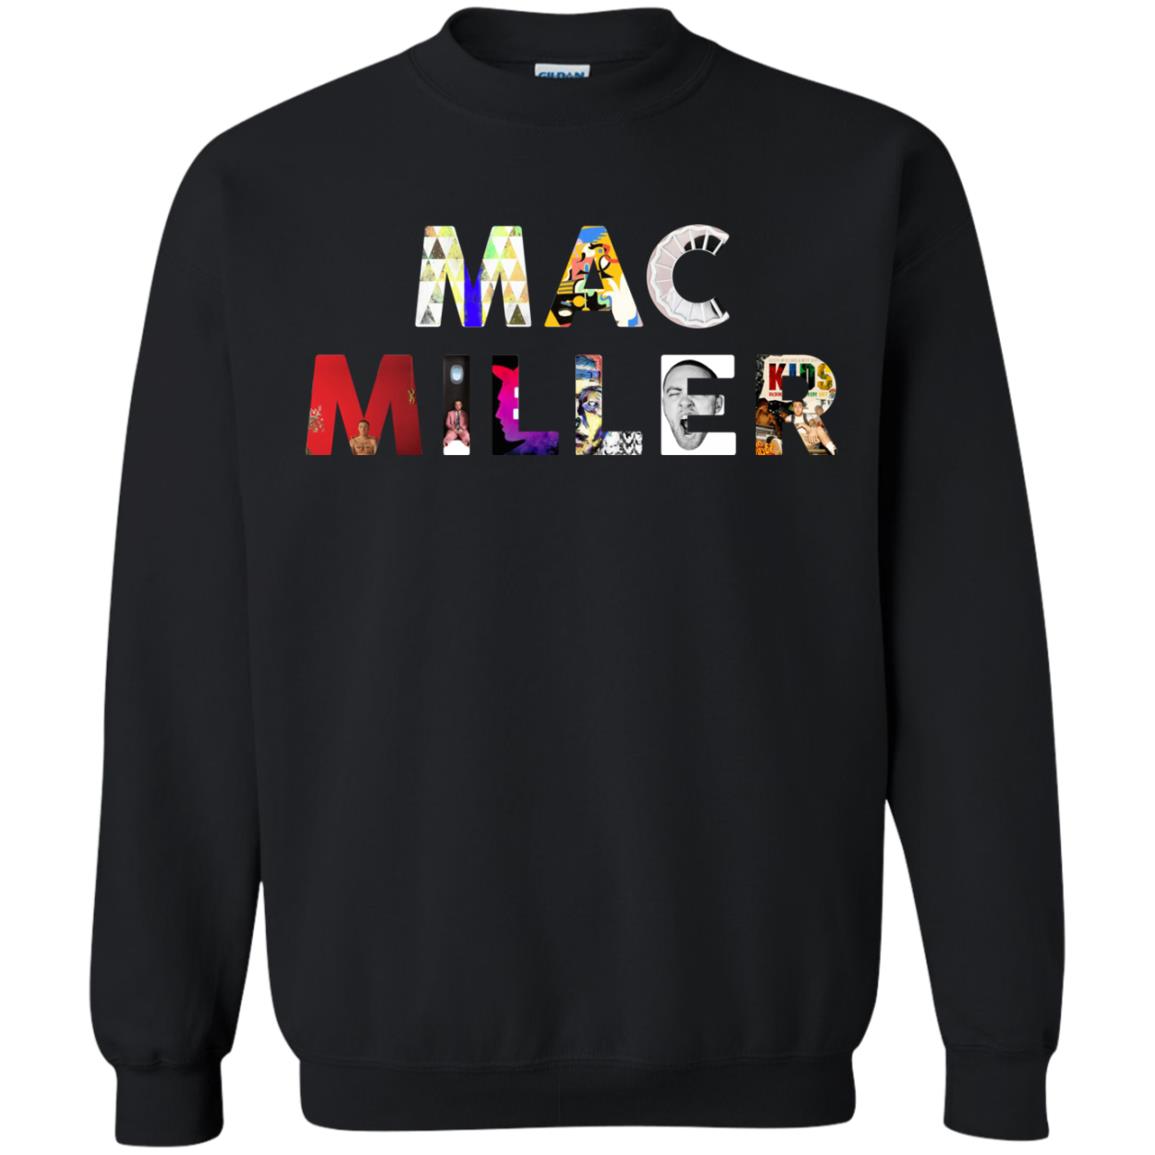 Mac Miller: Keep your memories alive T shirt, Ls, Hoodie - RobinPlaceFabrics1155 x 1155